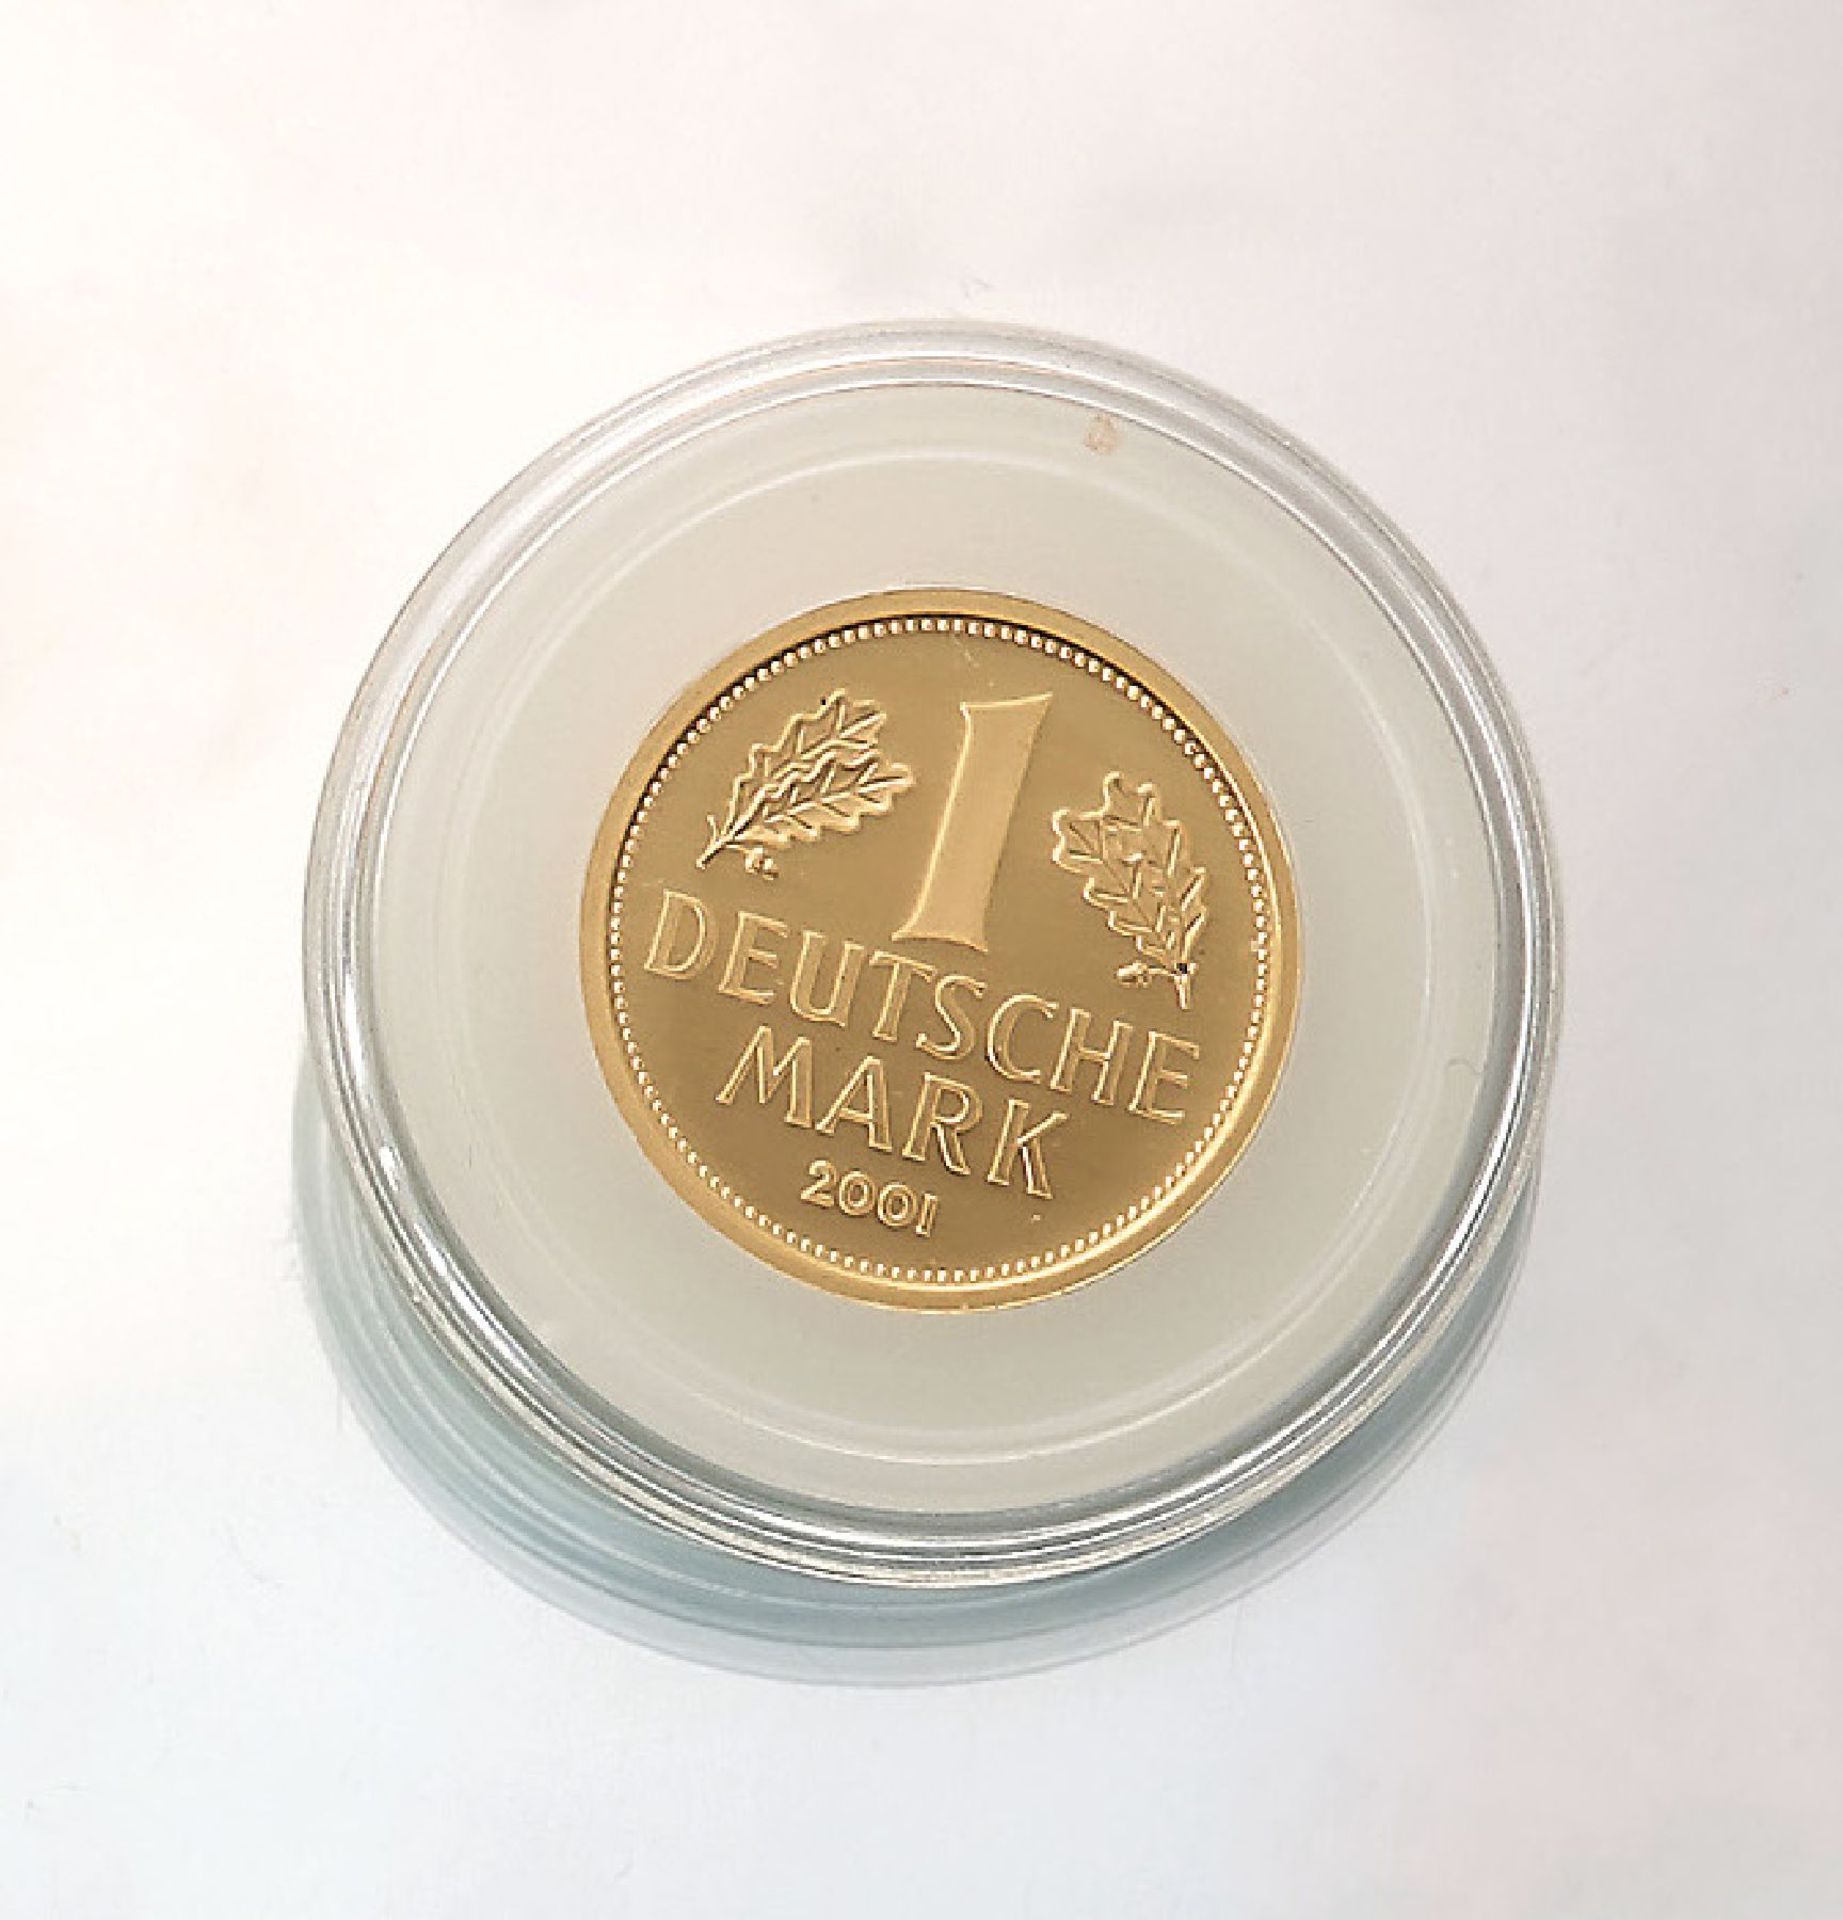 Goldmünze, 1 Mark, Deutschland, 2001, sogn. Goldmark, Prägemarke F, in MünzkapselGold coin, 1